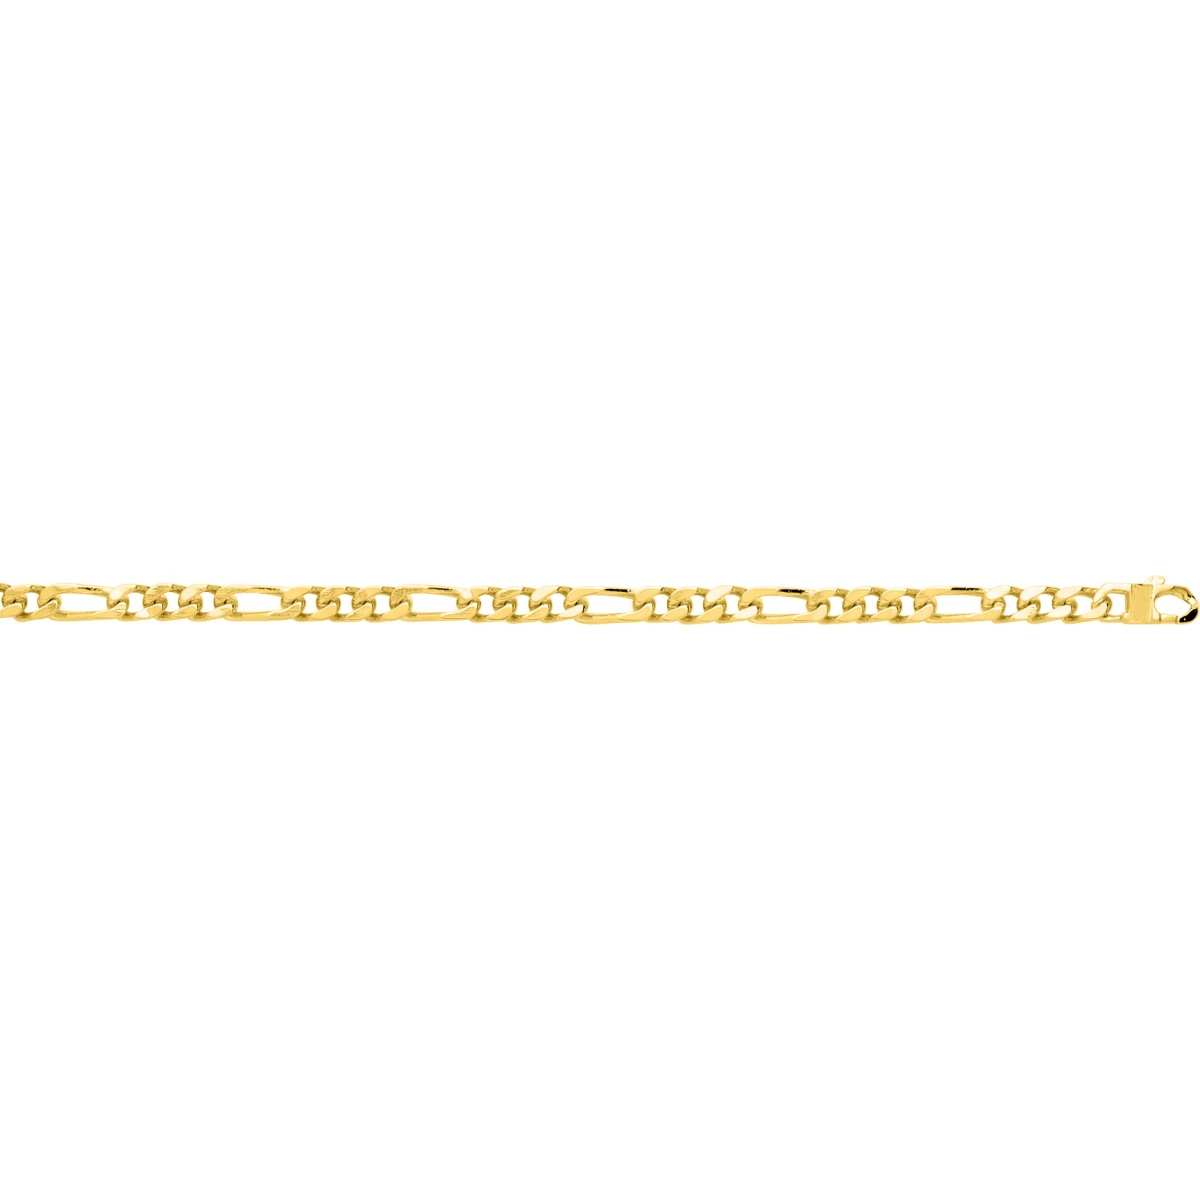 Bracelet gold plated Brass - Size: 19  Lua Blanca  101485B.19